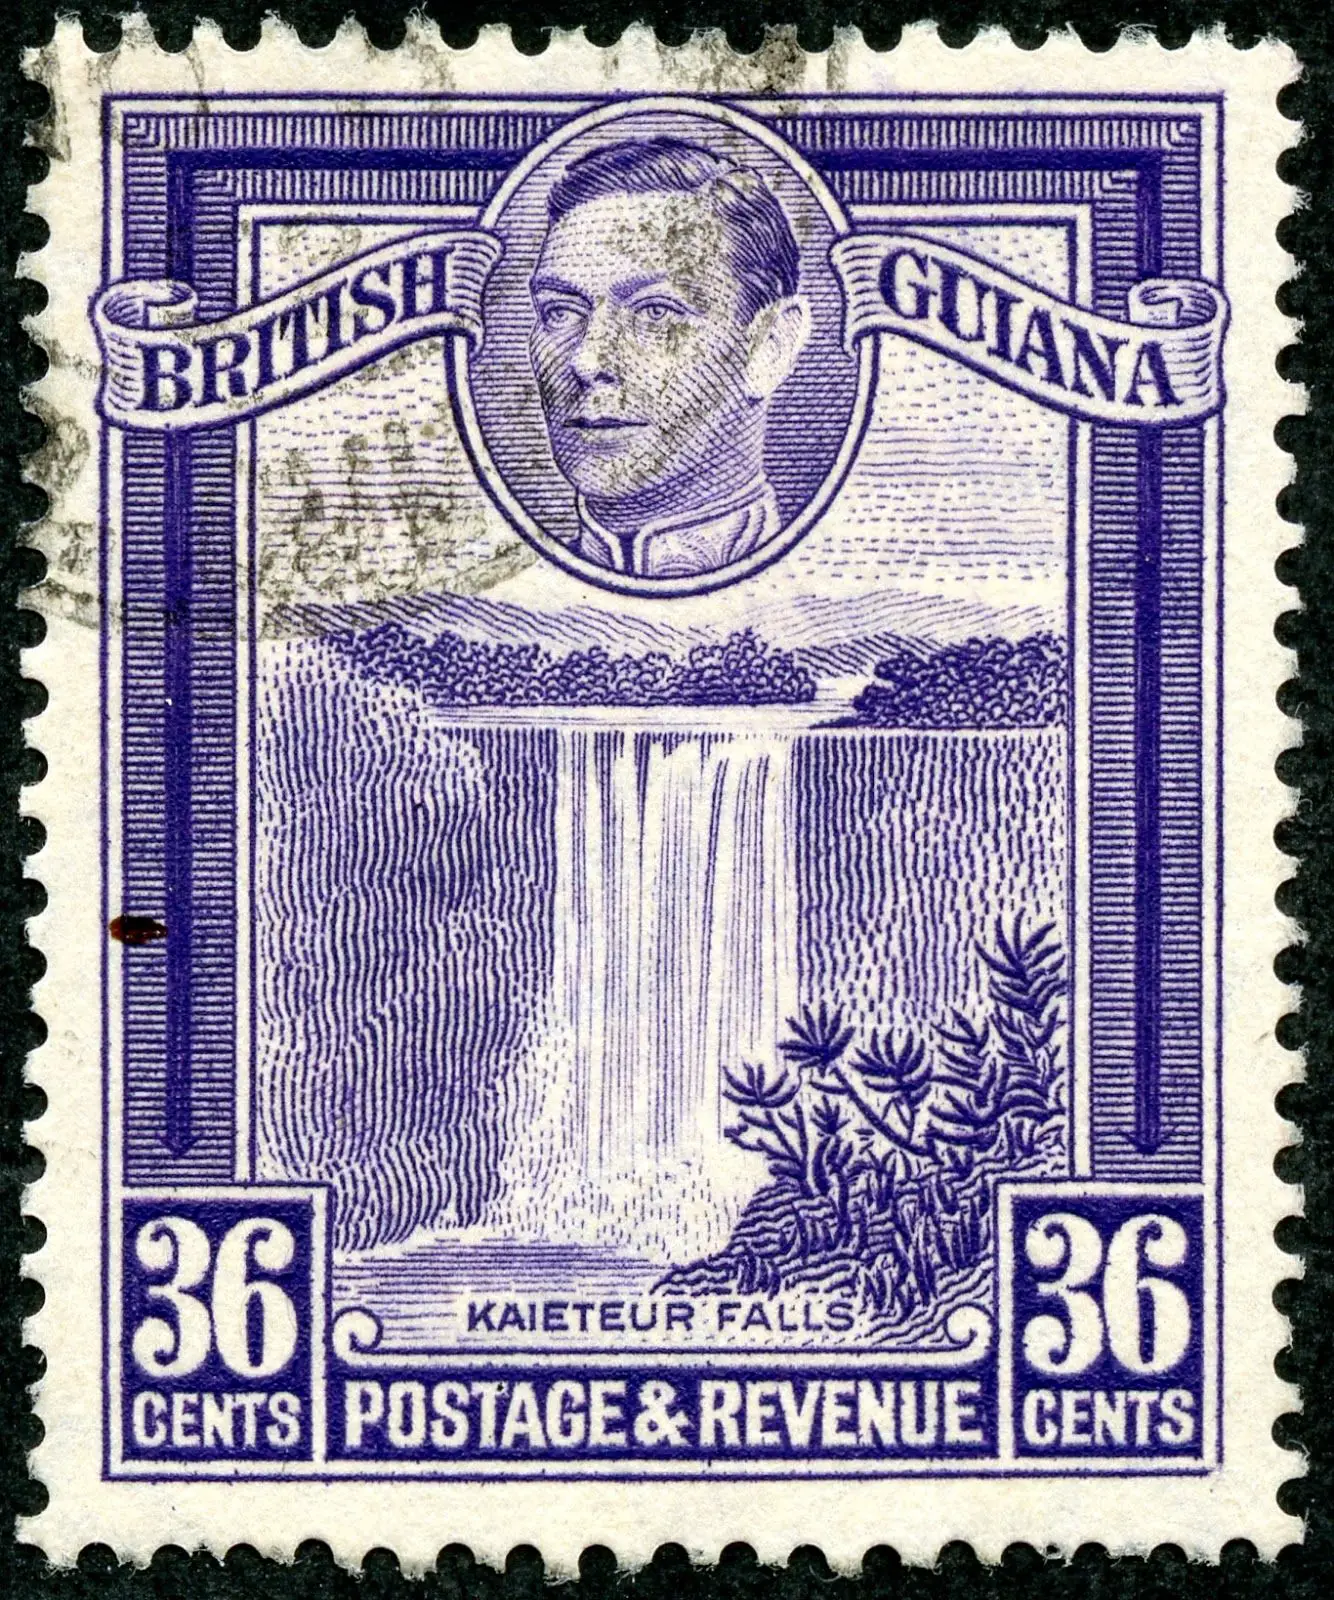 British Guiana 1938 Scott 235 36c purple " Kaieteur Falls" 